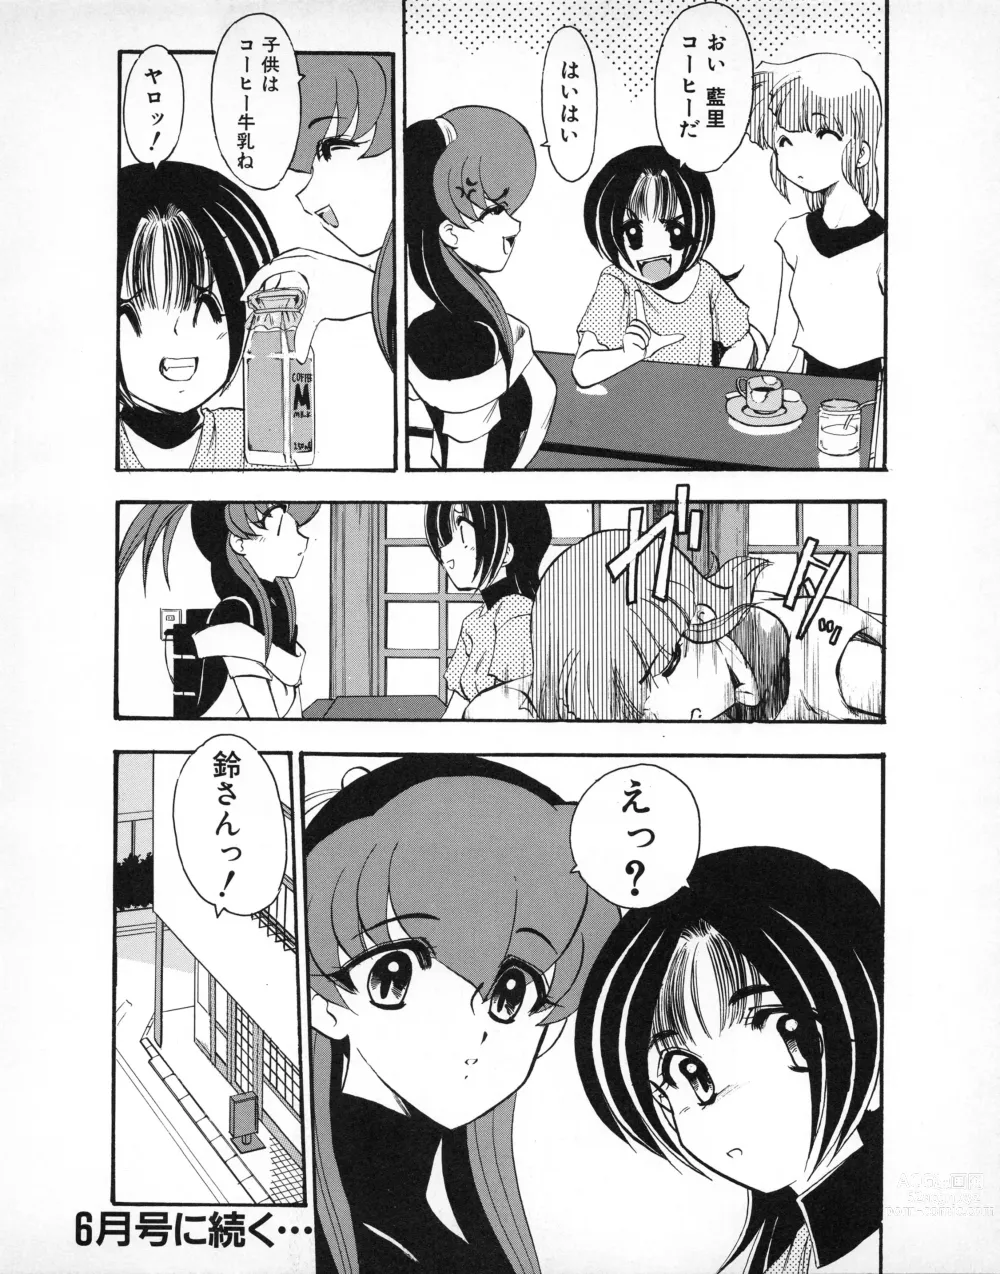 Page 178 of manga Tech Gian 031